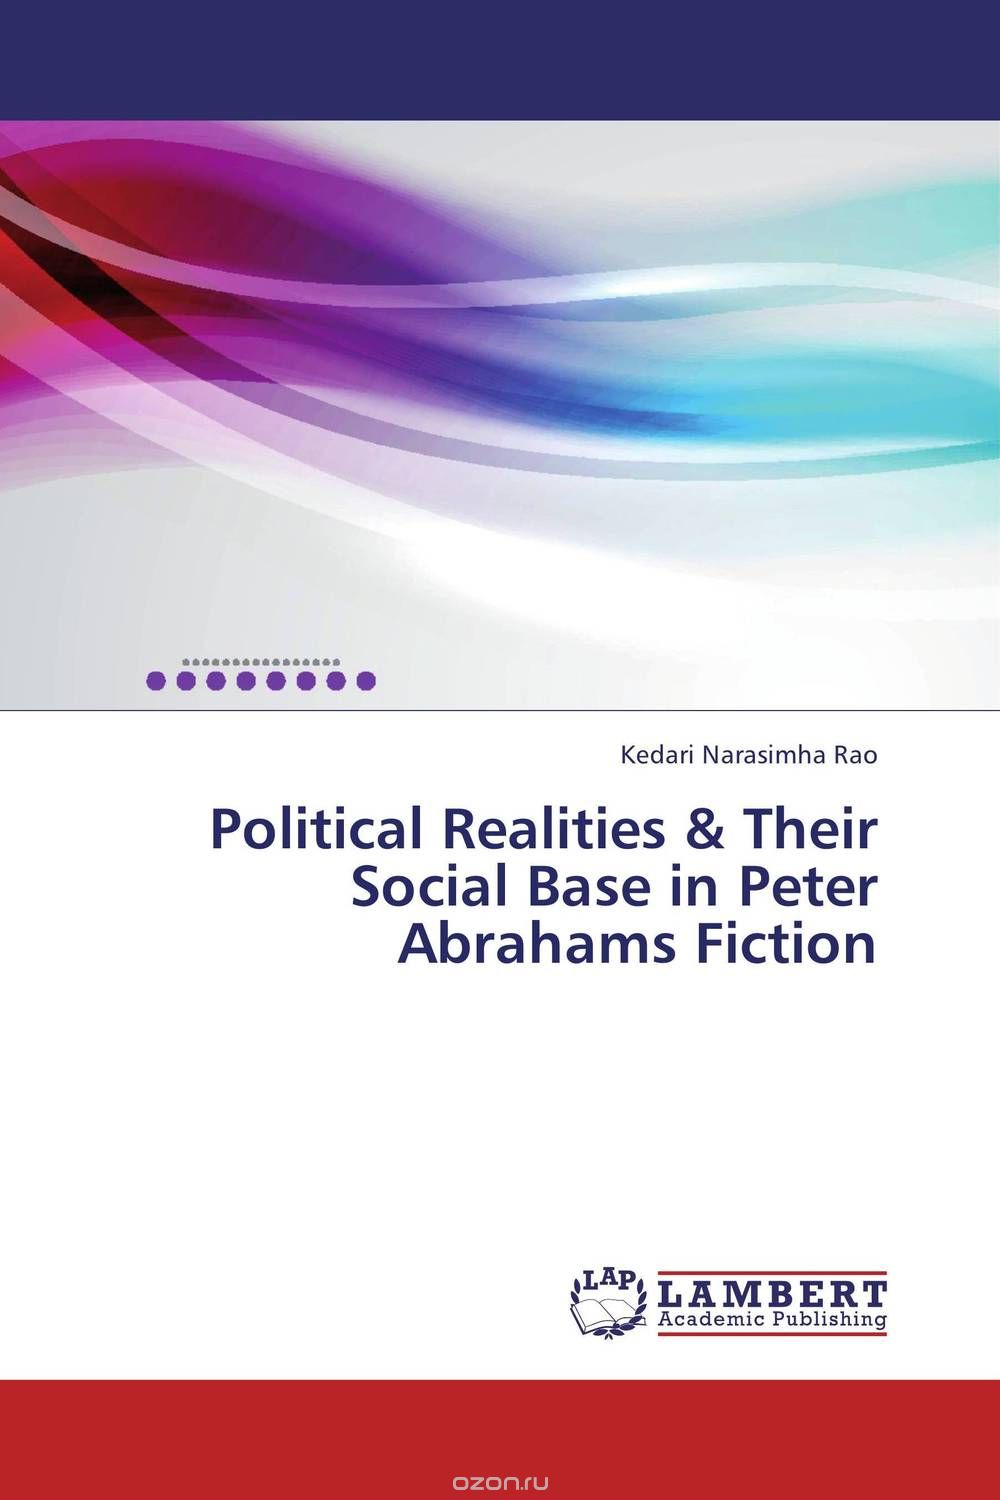 Скачать книгу "Political Realities & Their Social Base in Peter Abrahams Fiction"